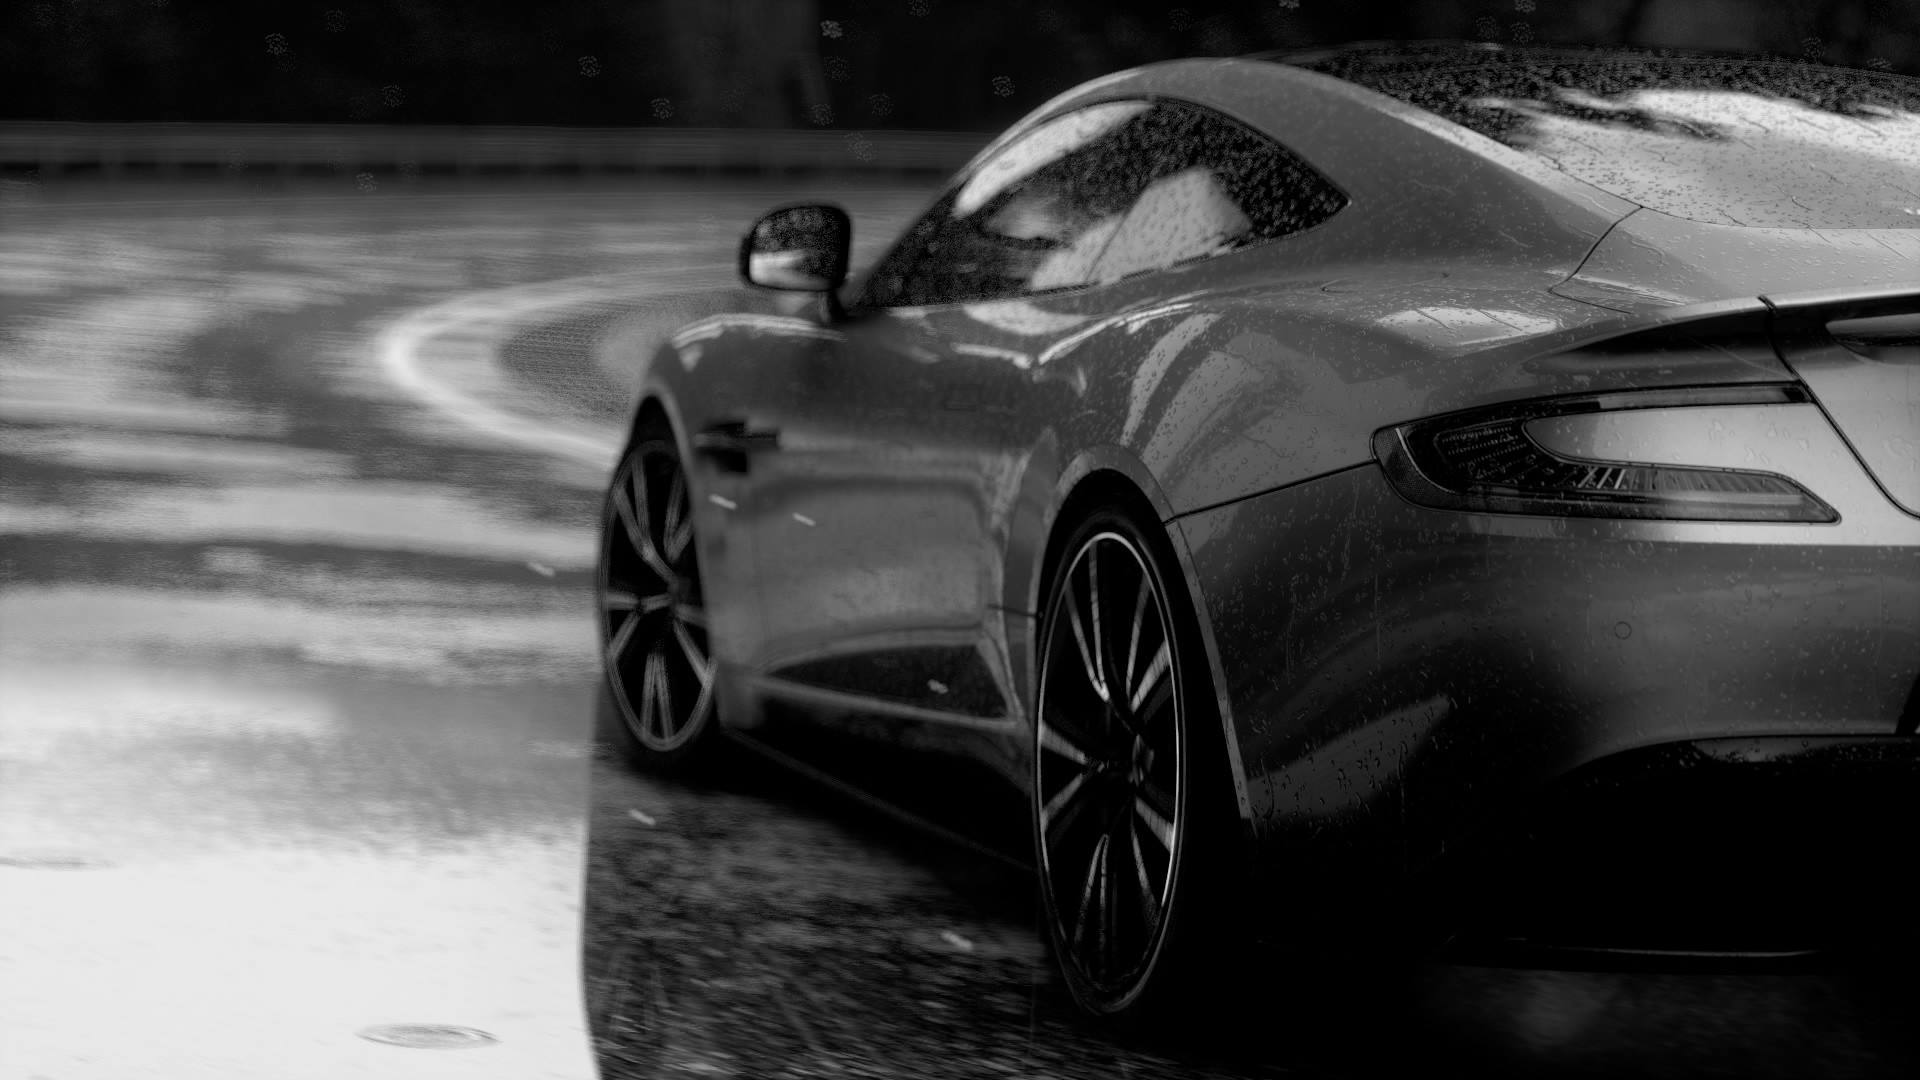 General 1920x1080 Driveclub car rain Aston Martin monochrome wet road wet vehicle video games screen shot